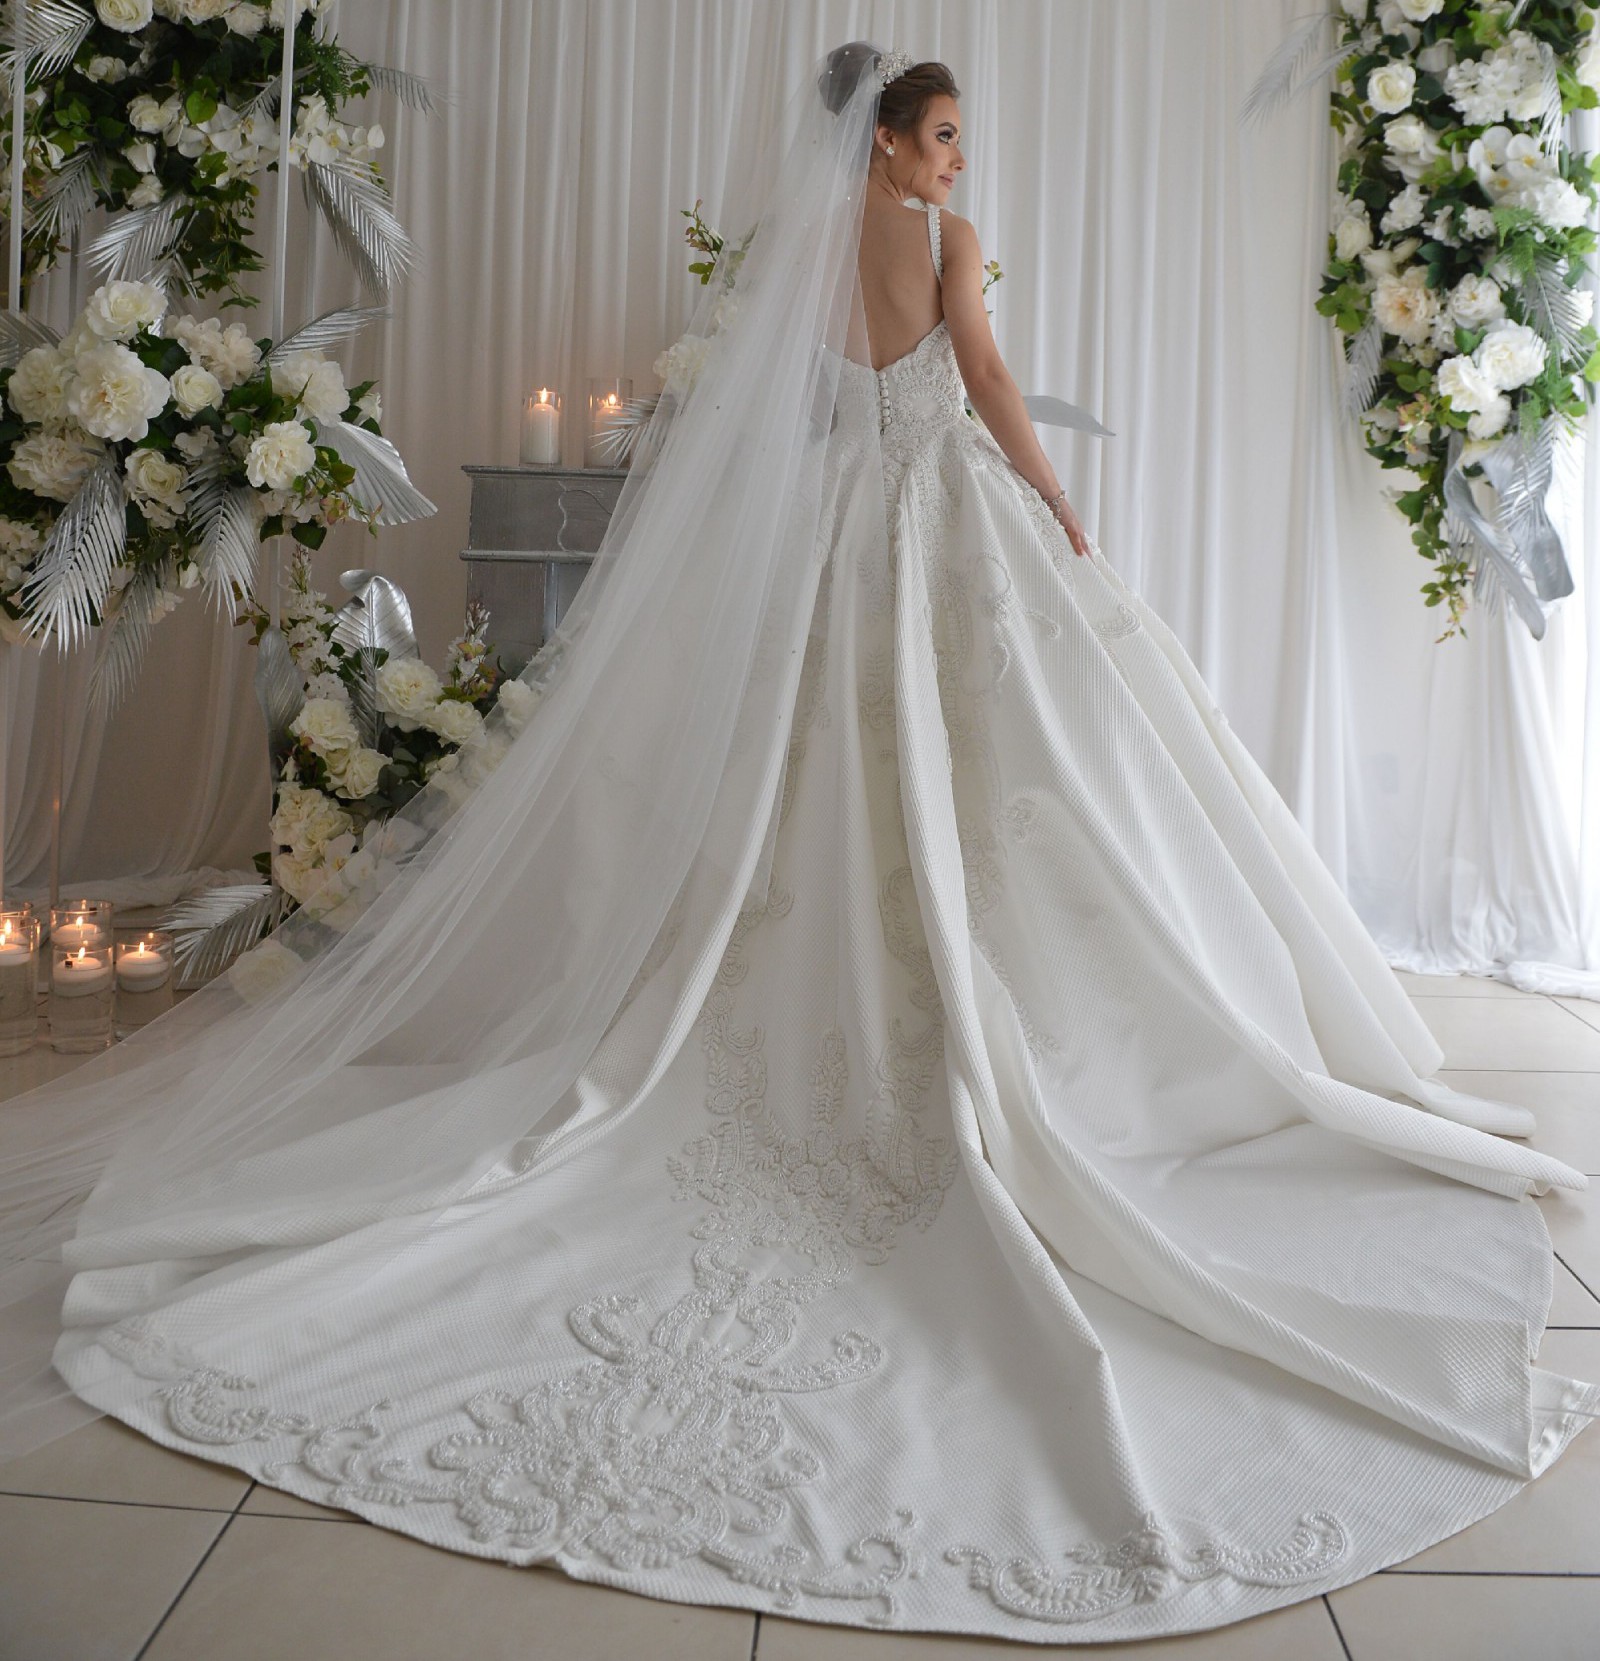 Suzanna Blazevic Suzanna Blazevic Used Wedding Dress Save 59% - Stillwhite